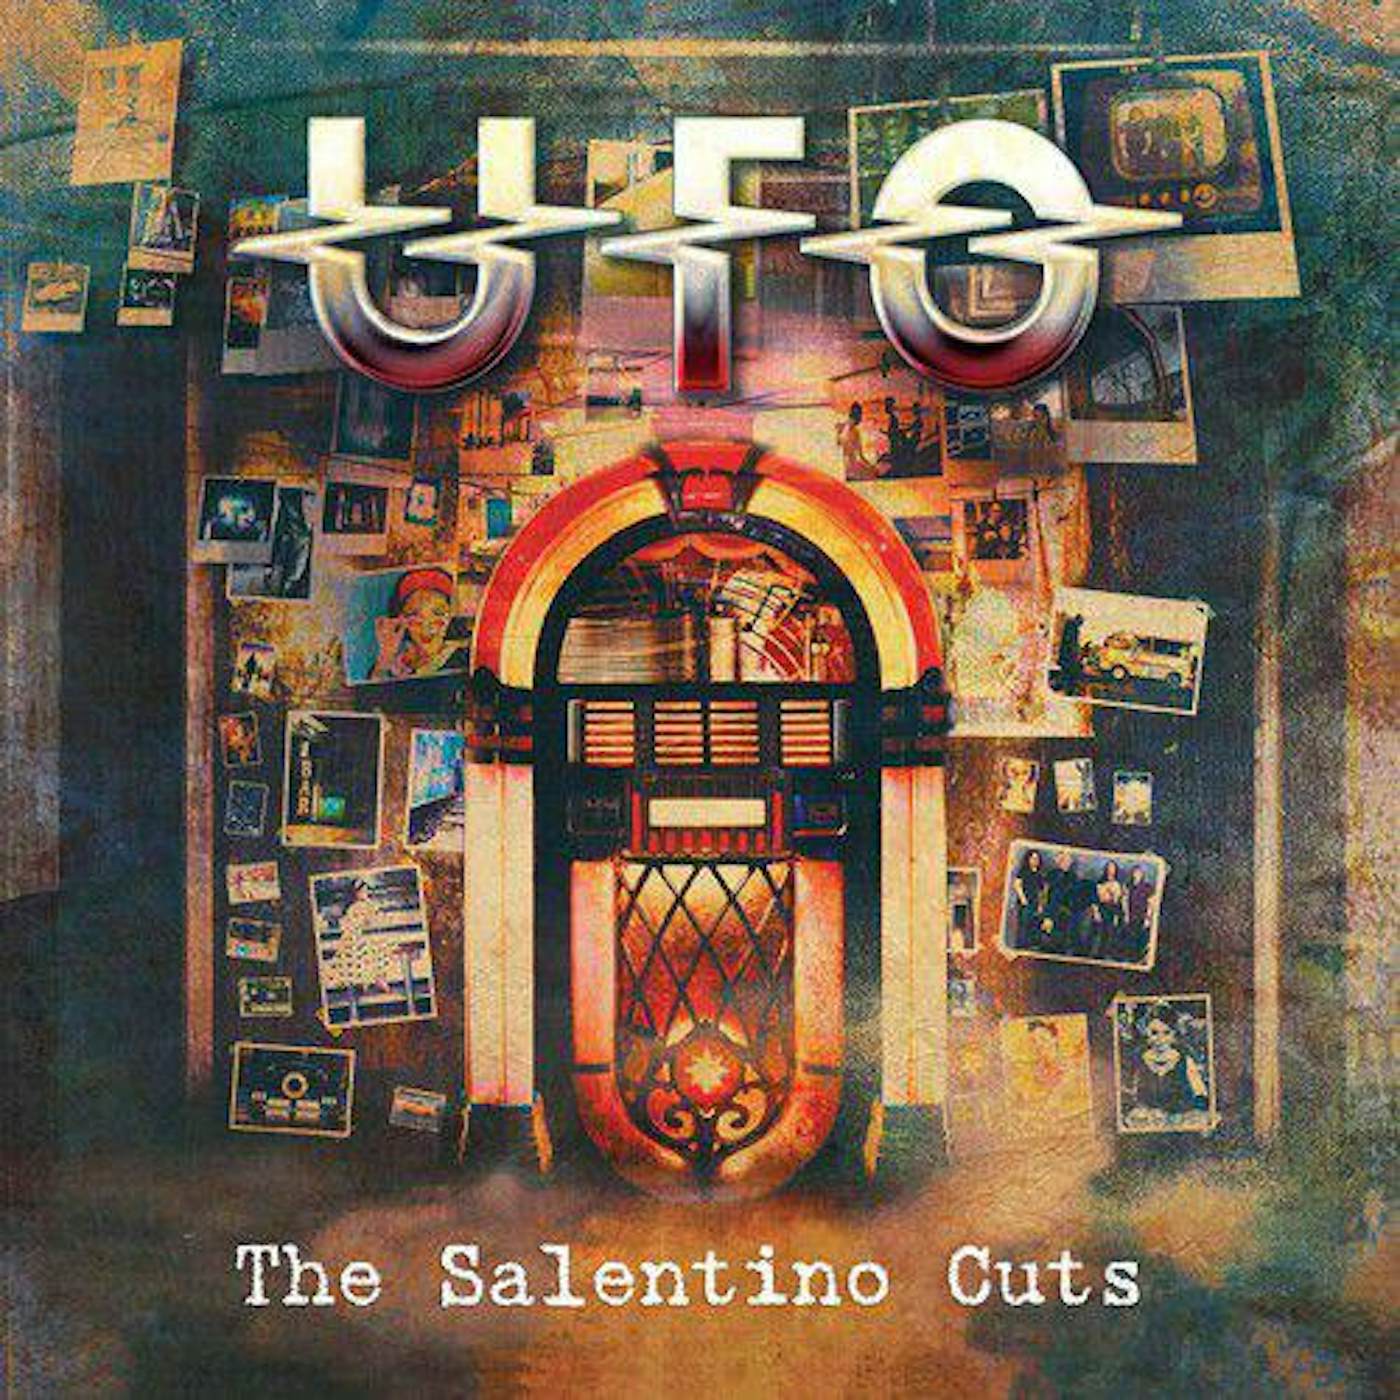 UFO The Salentino Cuts - Yellow/Red Splatter Vinyl Record